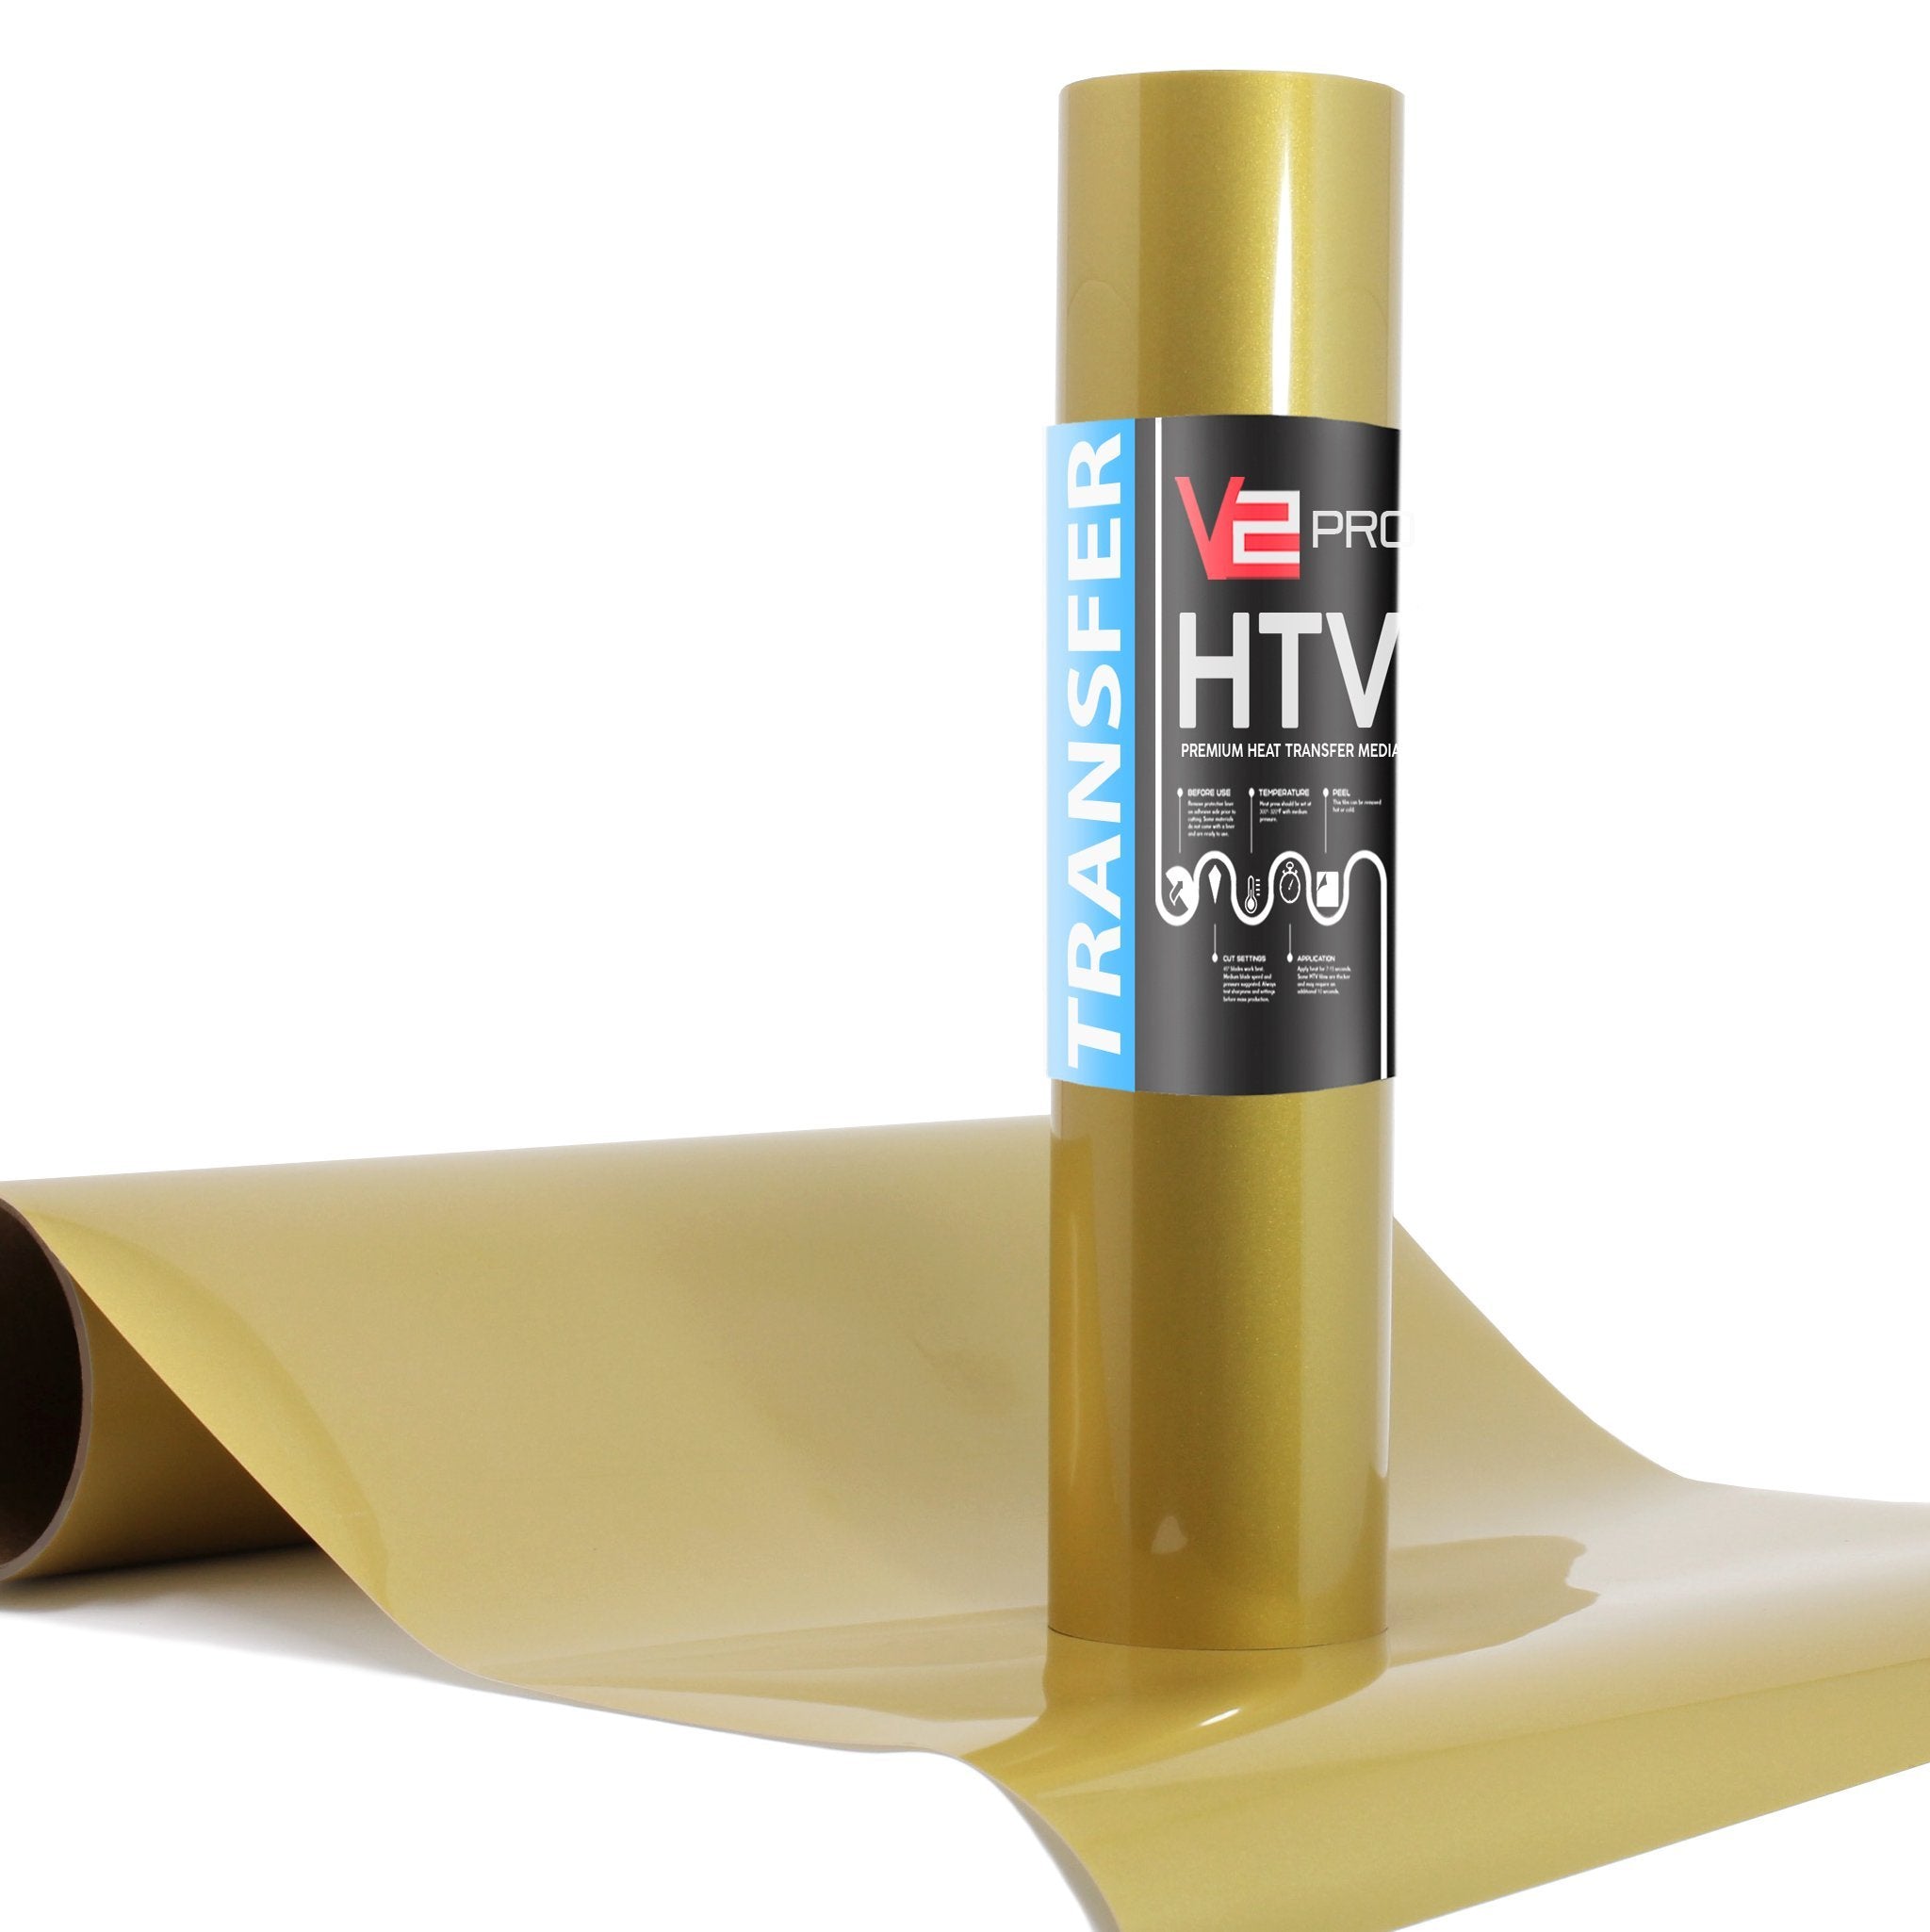 V2 Pro Gold Heat Transfer Film - The VViViD Vinyl Wrap Shop